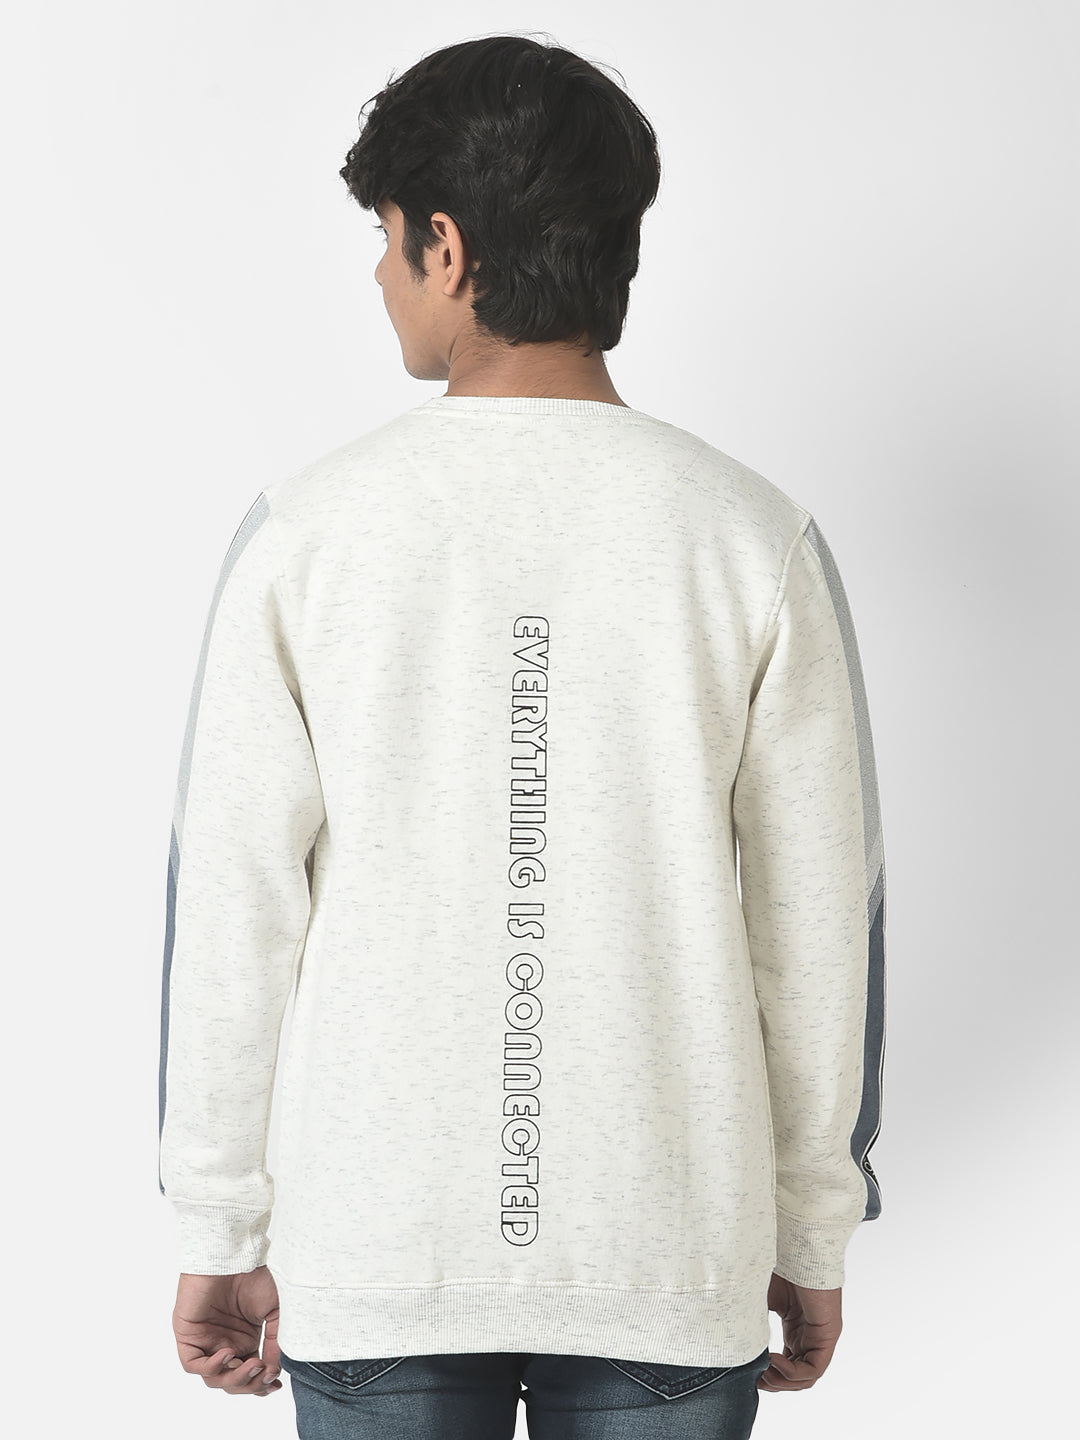  White Connected Sweatshirt